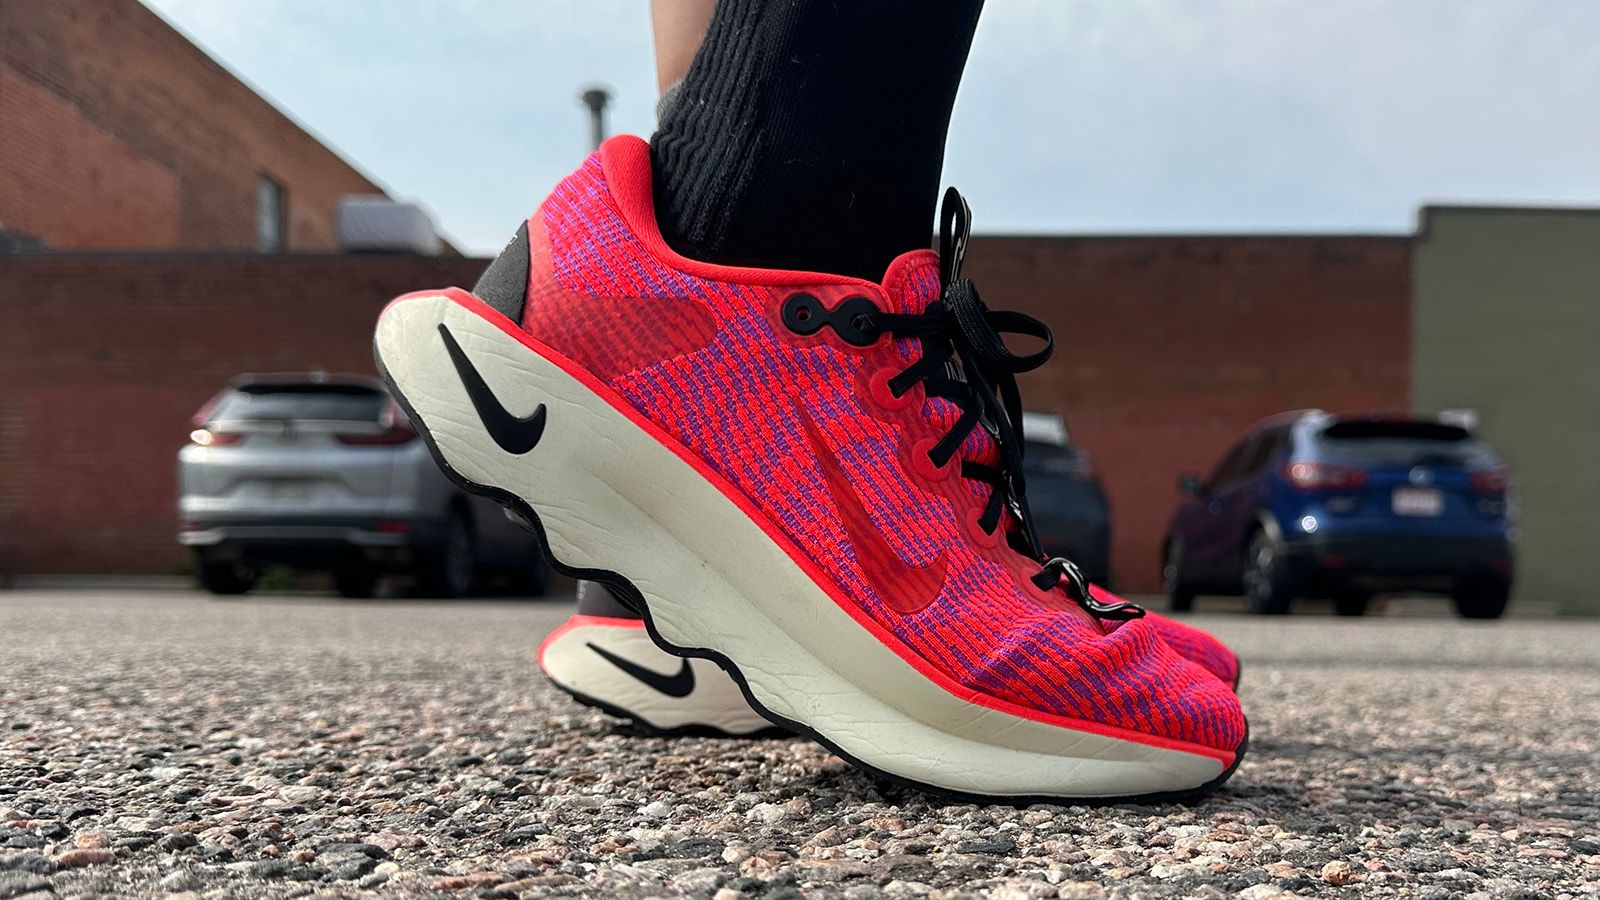 Nike Motiva shoe review: for feet | Underscored